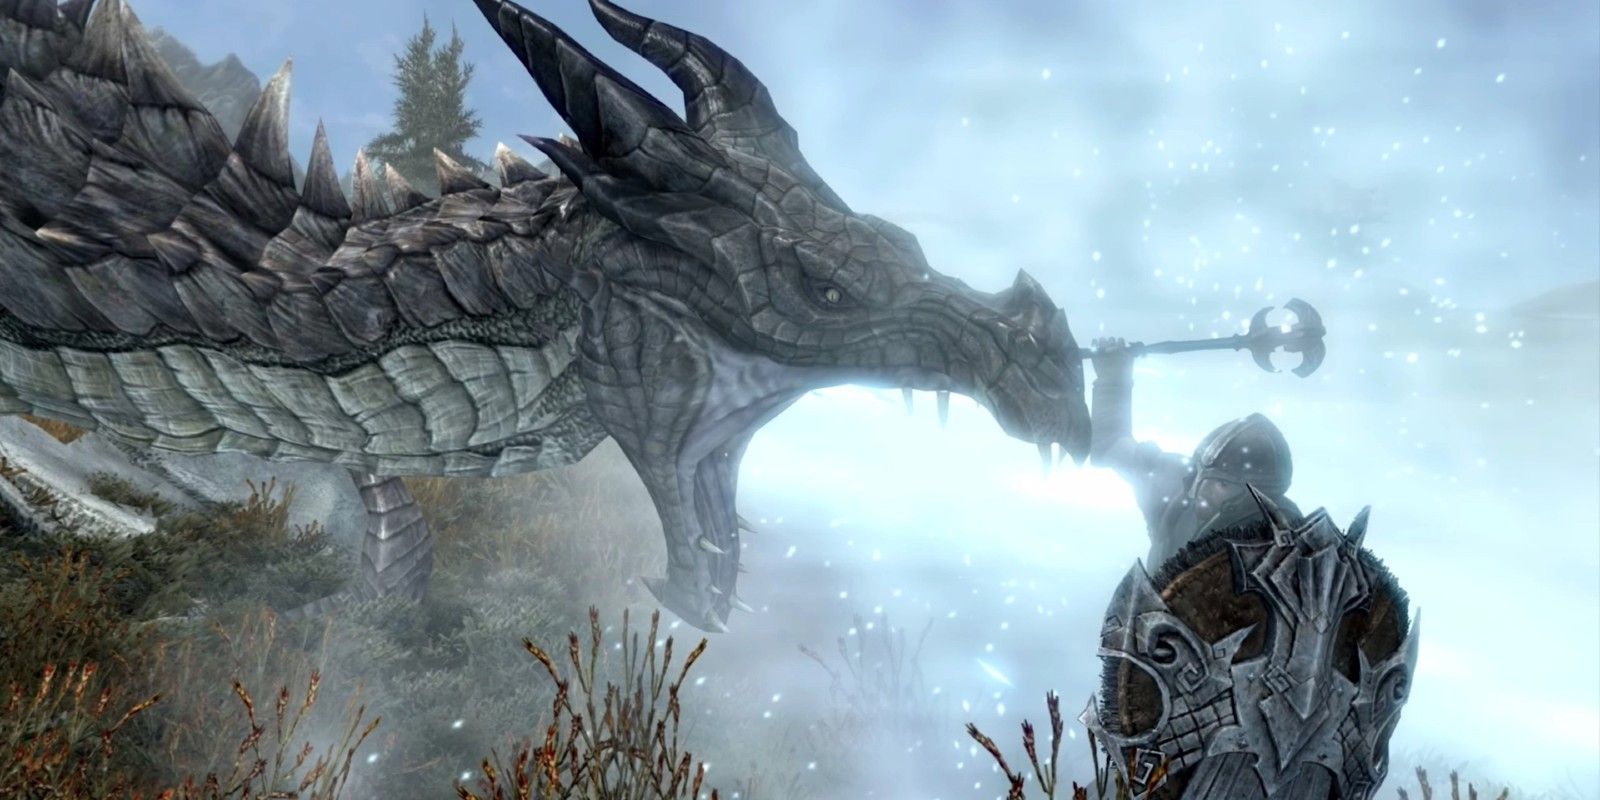 Skyrim playable character dragonborn races